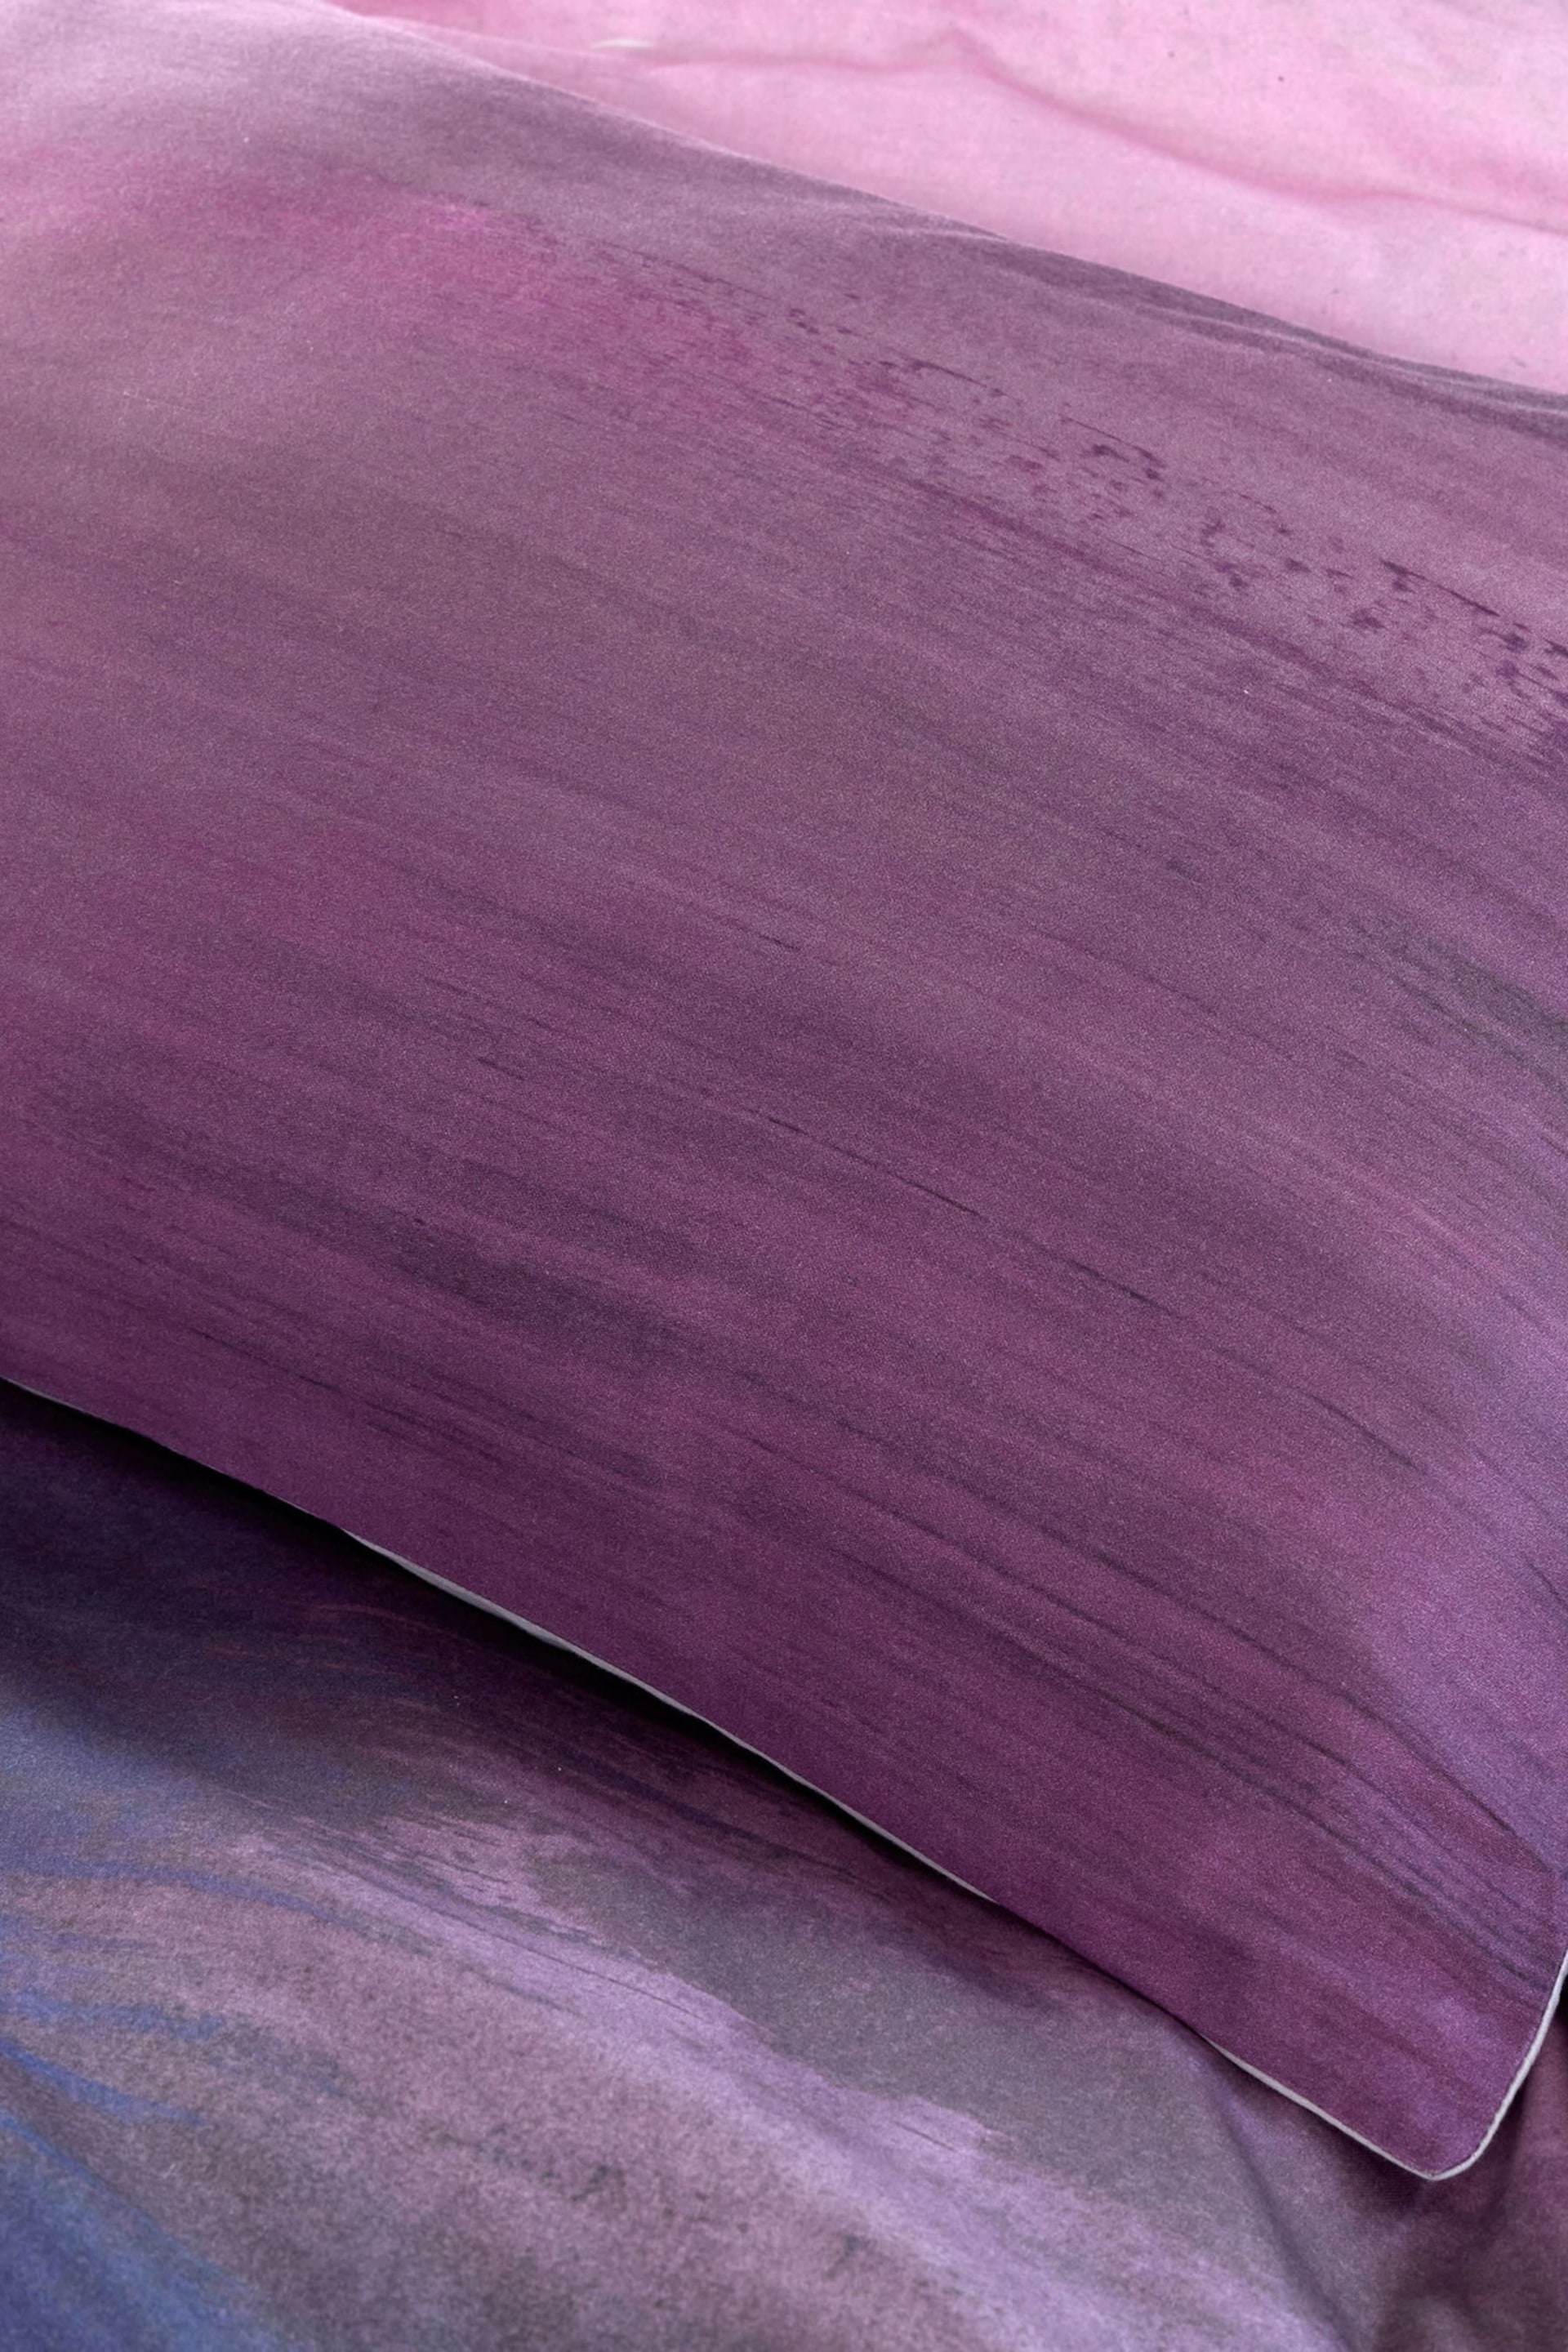 Vantona Purple Landscape Wash Duvet Cover and Pillowcase Set - Image 3 of 4